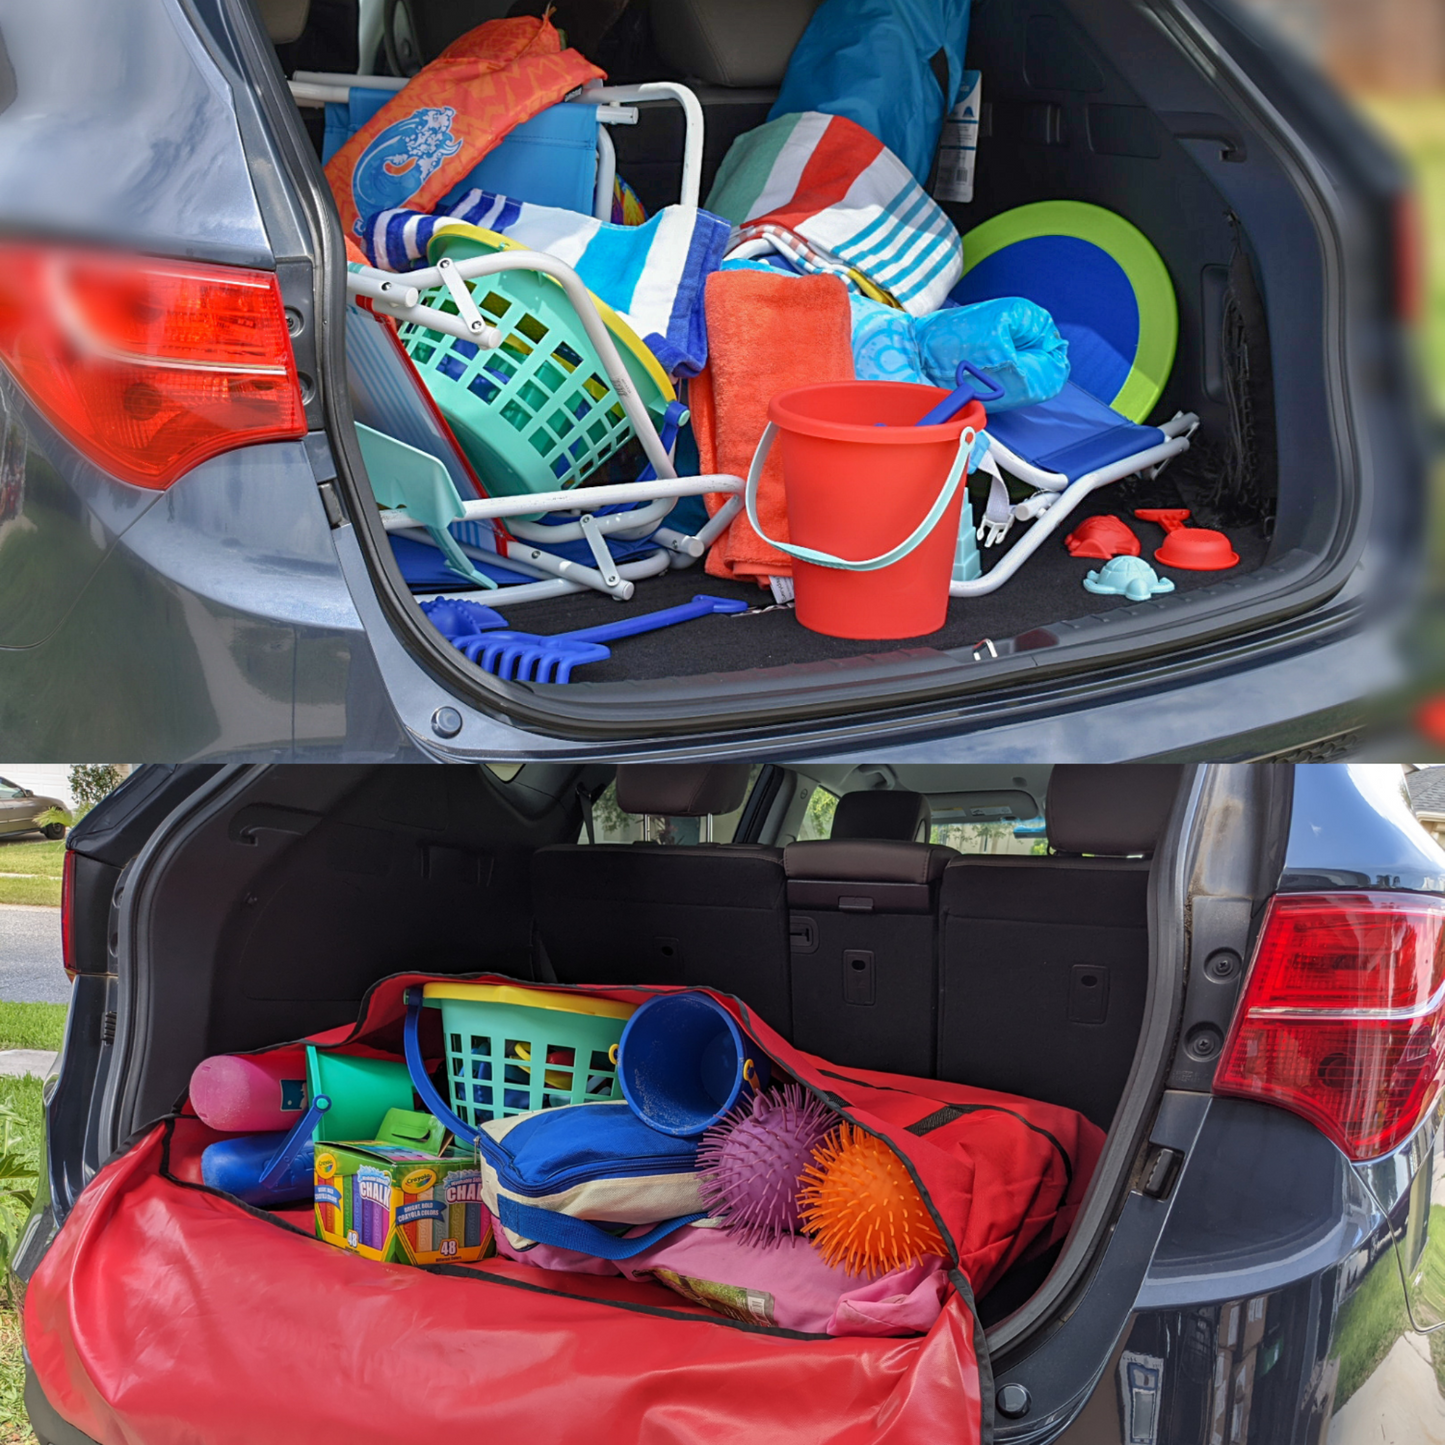 Neatly arranged bag inside car trunk with the help of a trunk car organizer.